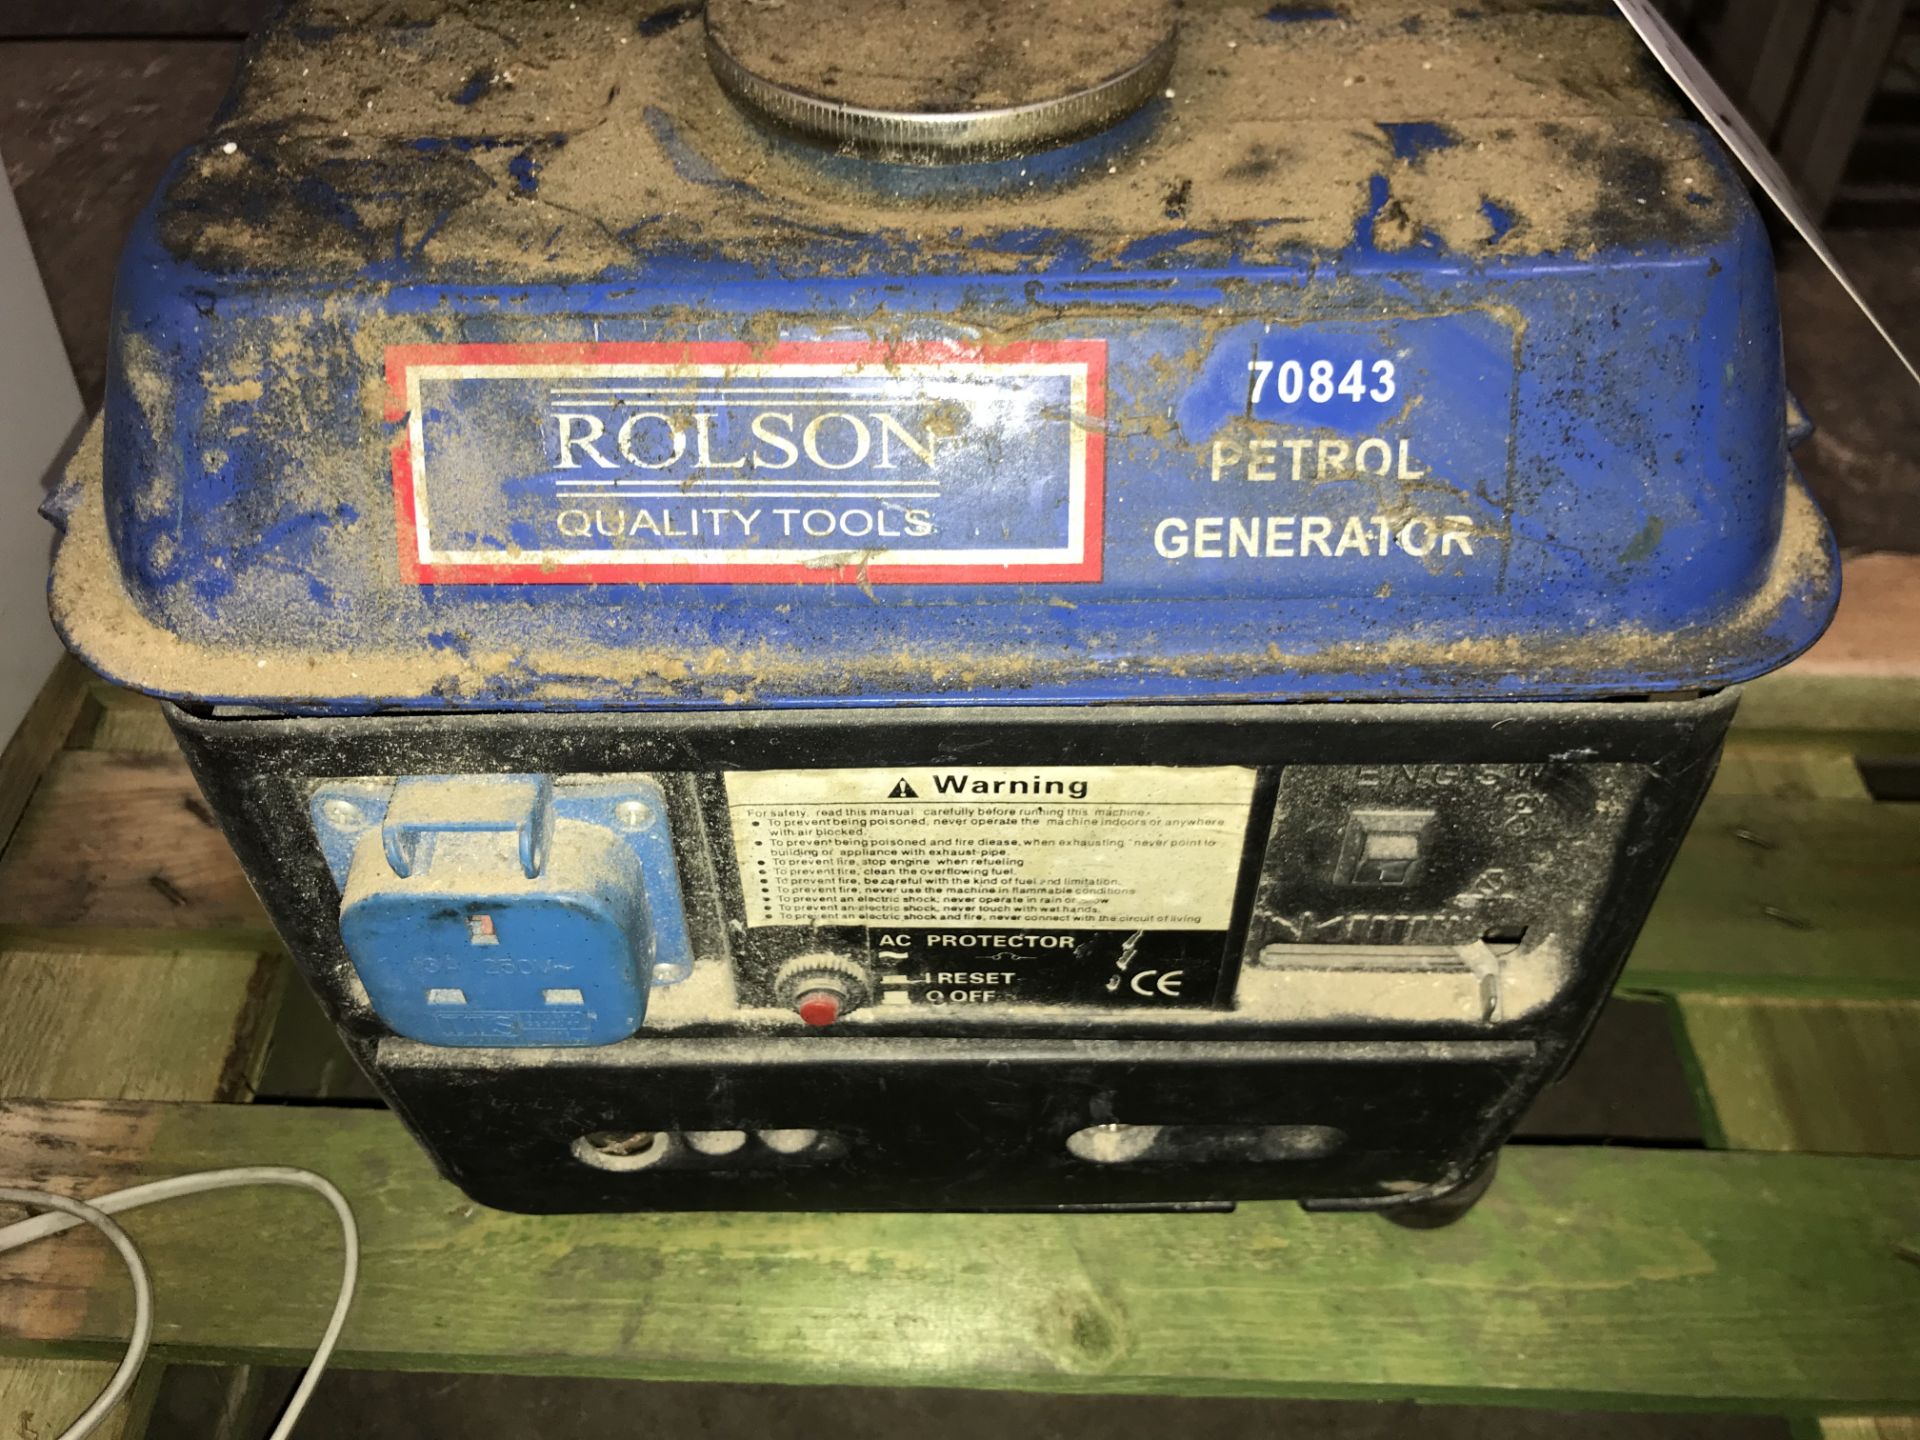 Rolson 70843 Petrol Generator - Image 2 of 2